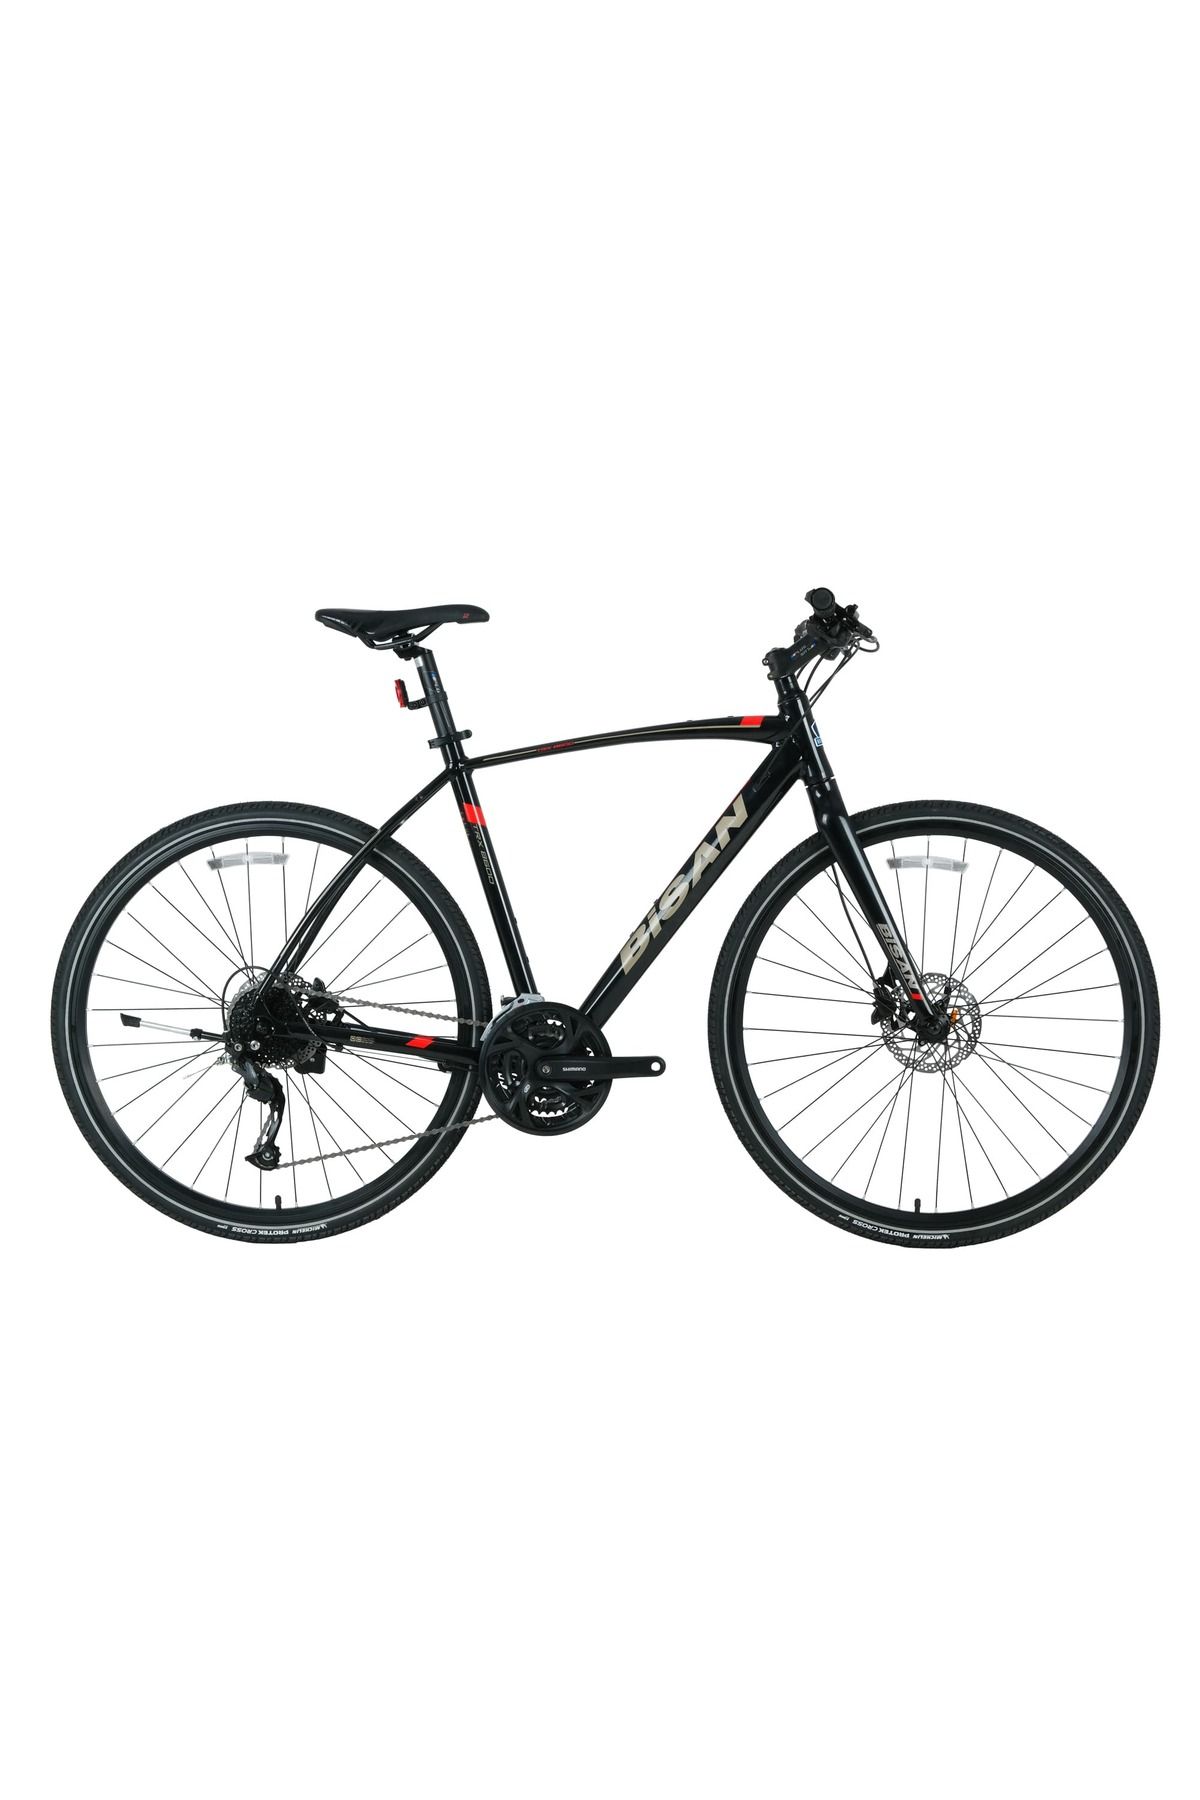 Bisan Trx8600 Deore 28 Jant Şehir Bisikleti Parlak Siyah-Kırmızı 54 cm